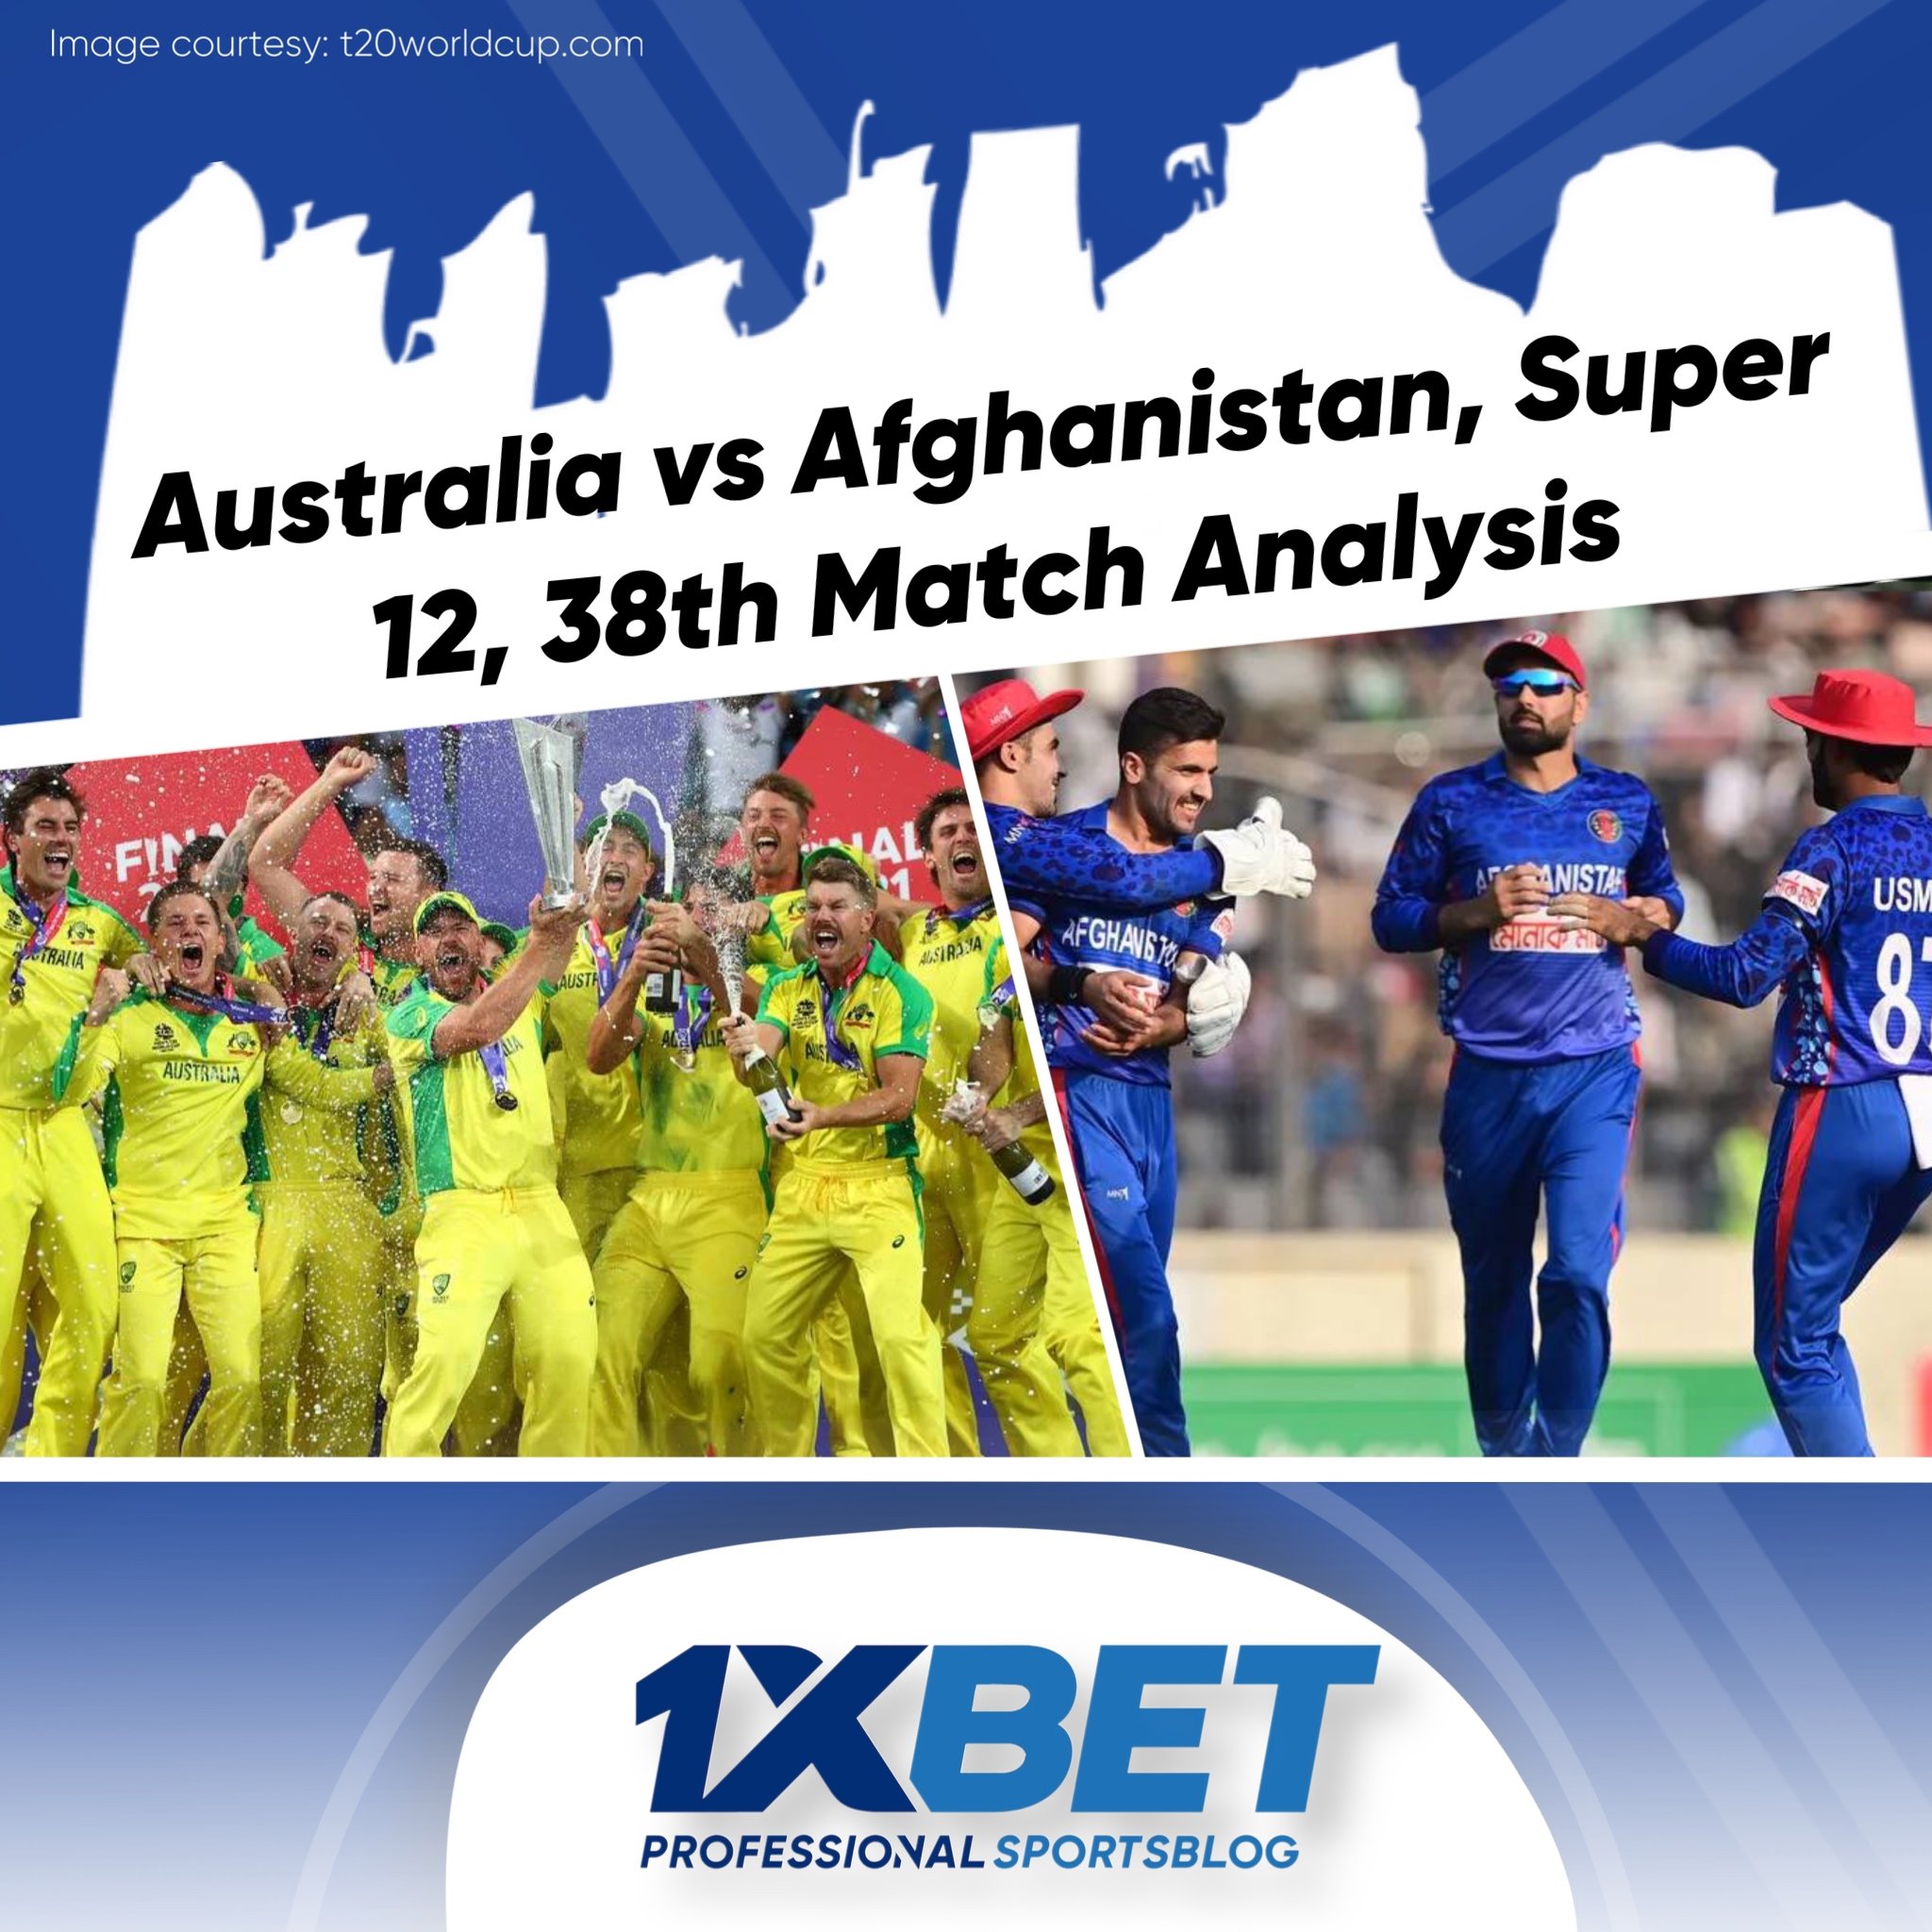 Australia vs Afghanistan, Super 12, 38th Match Analysis